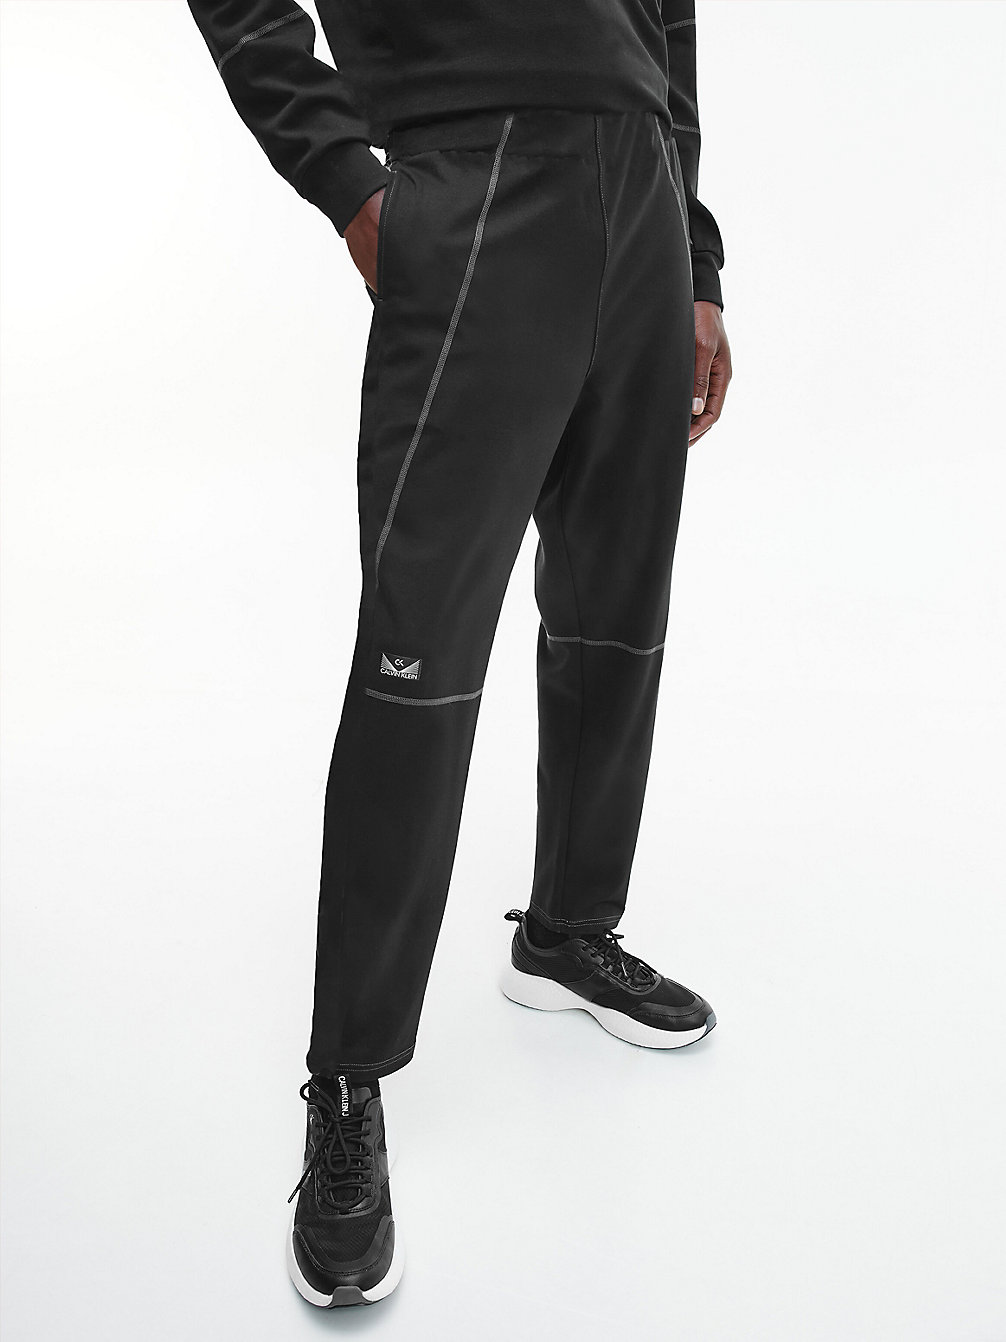 CK BLACK/ PERISCOPE/ STONE GREY Comfort Stretch Joggers undefined men Calvin Klein